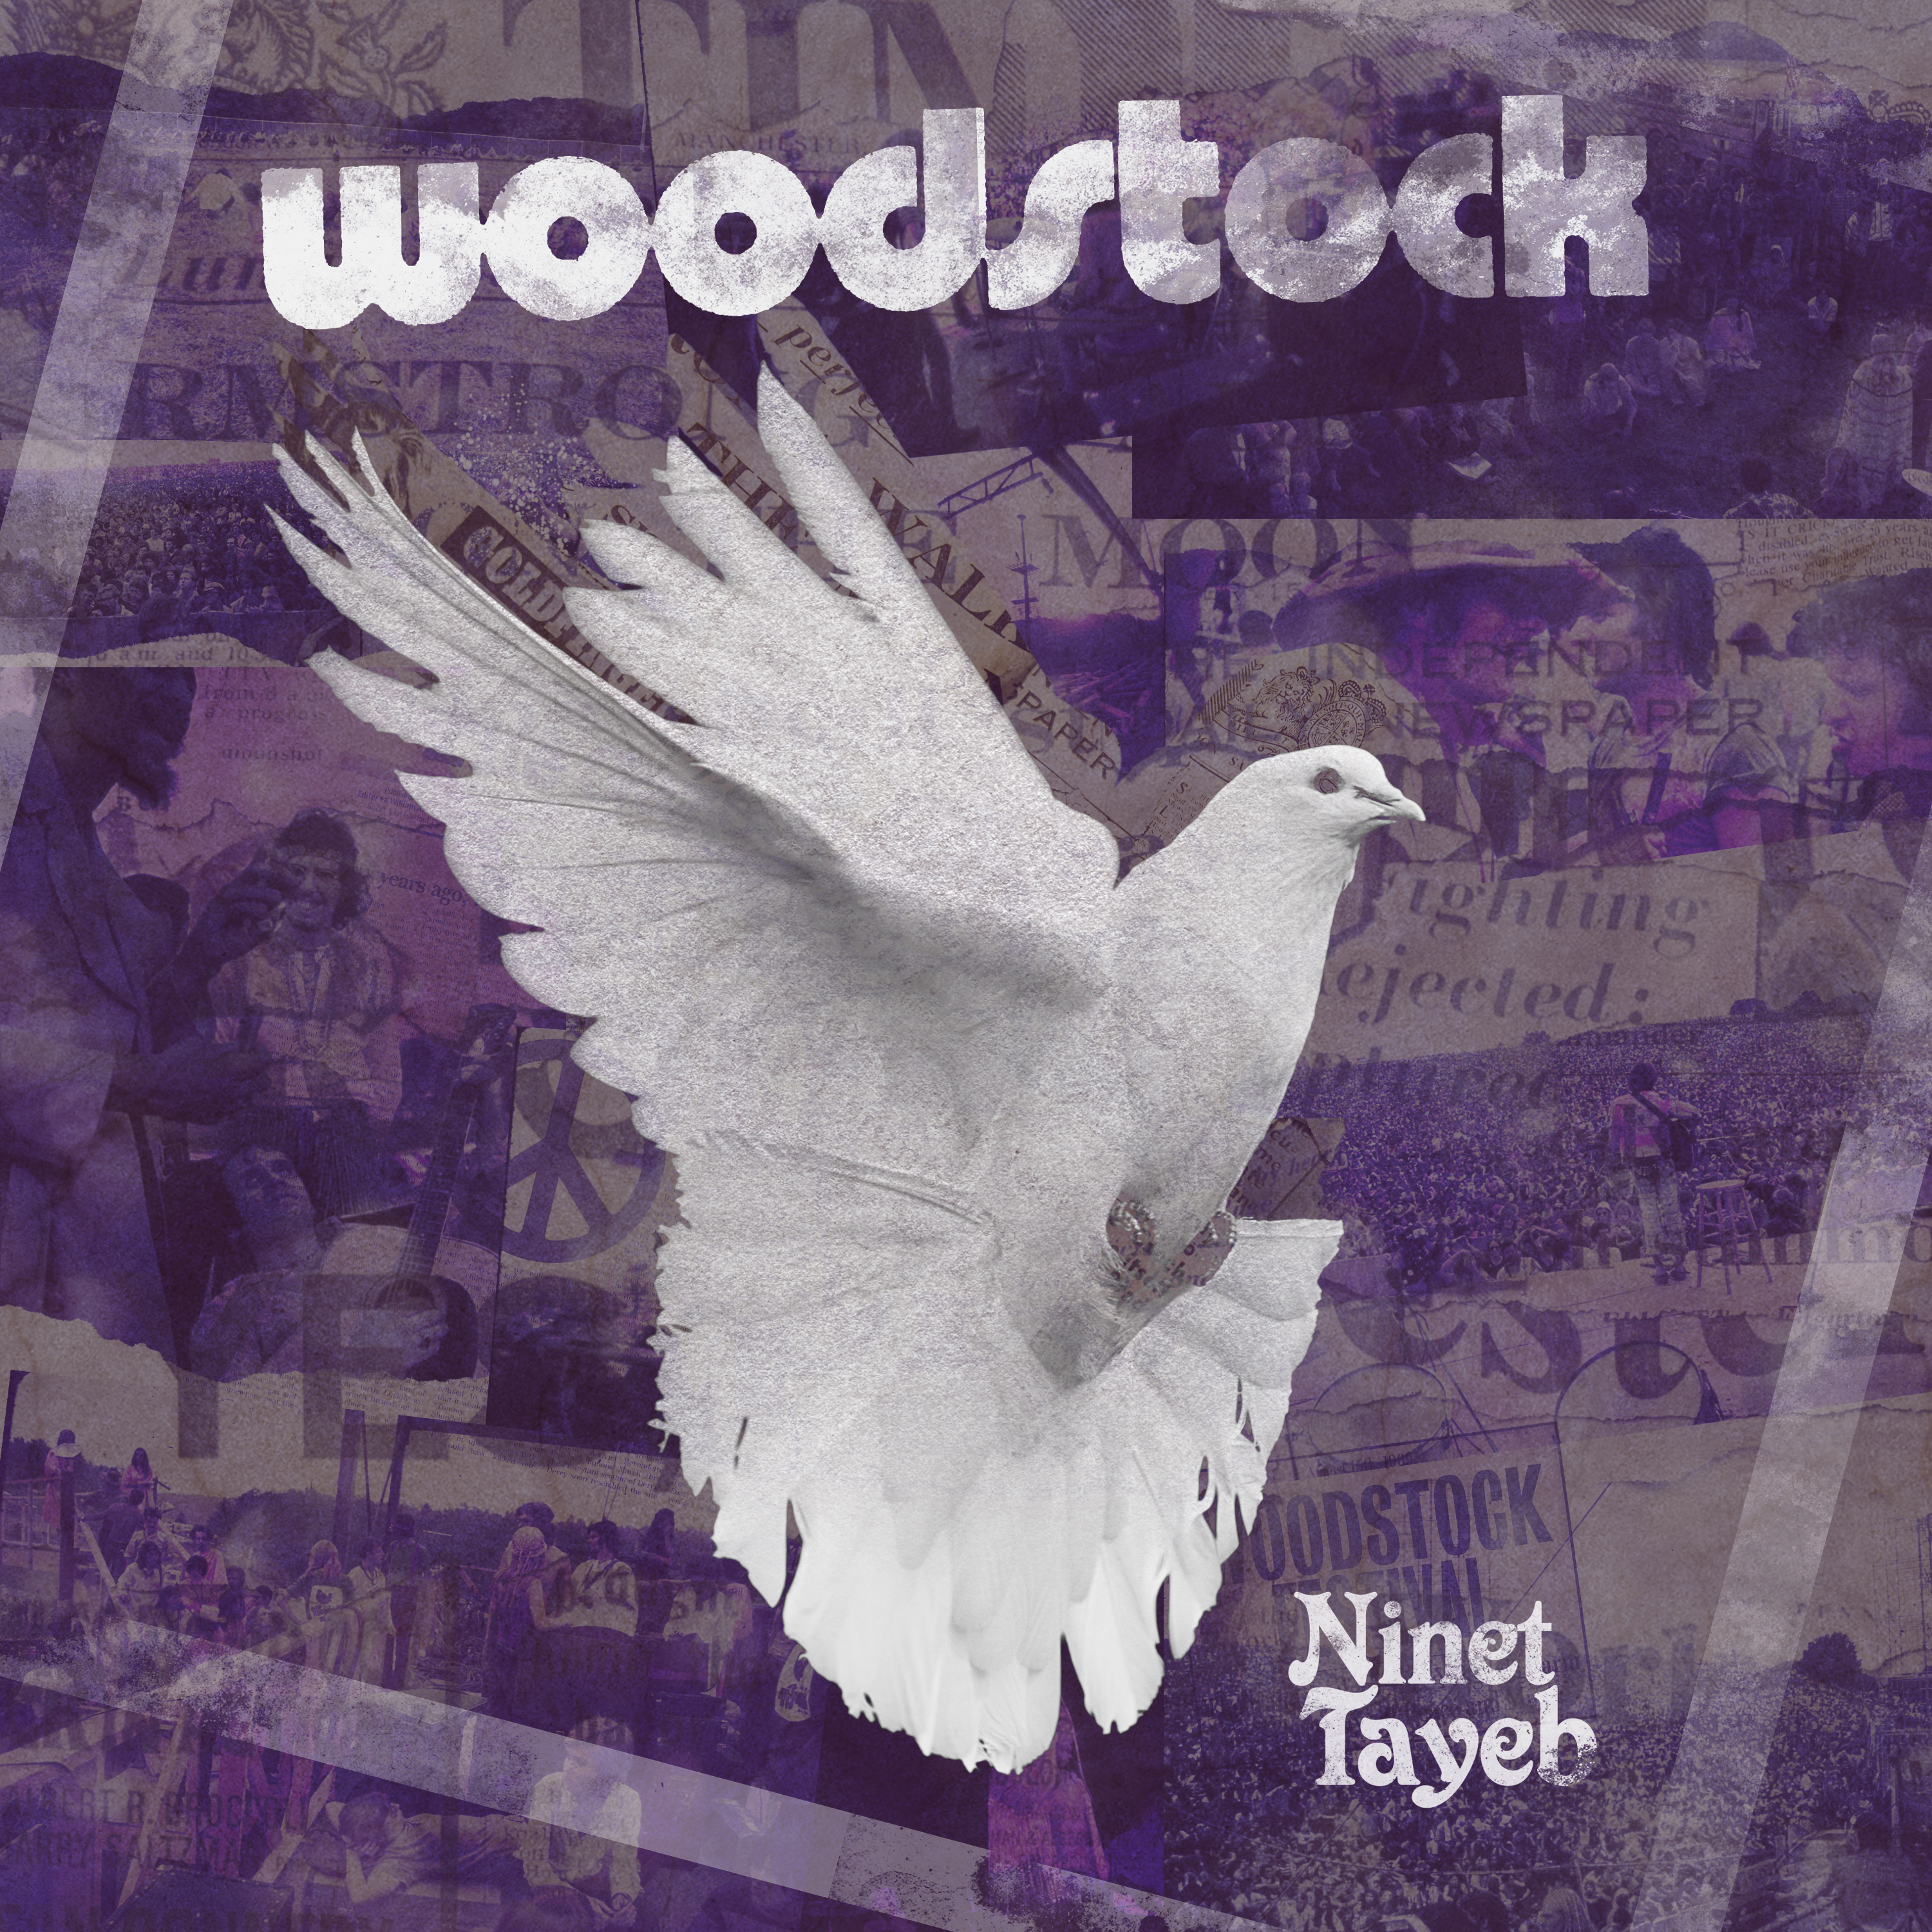 Watch Ninet Tayeb’s Reinterpretation of Joni Mitchell’s Classic “Woodstock”